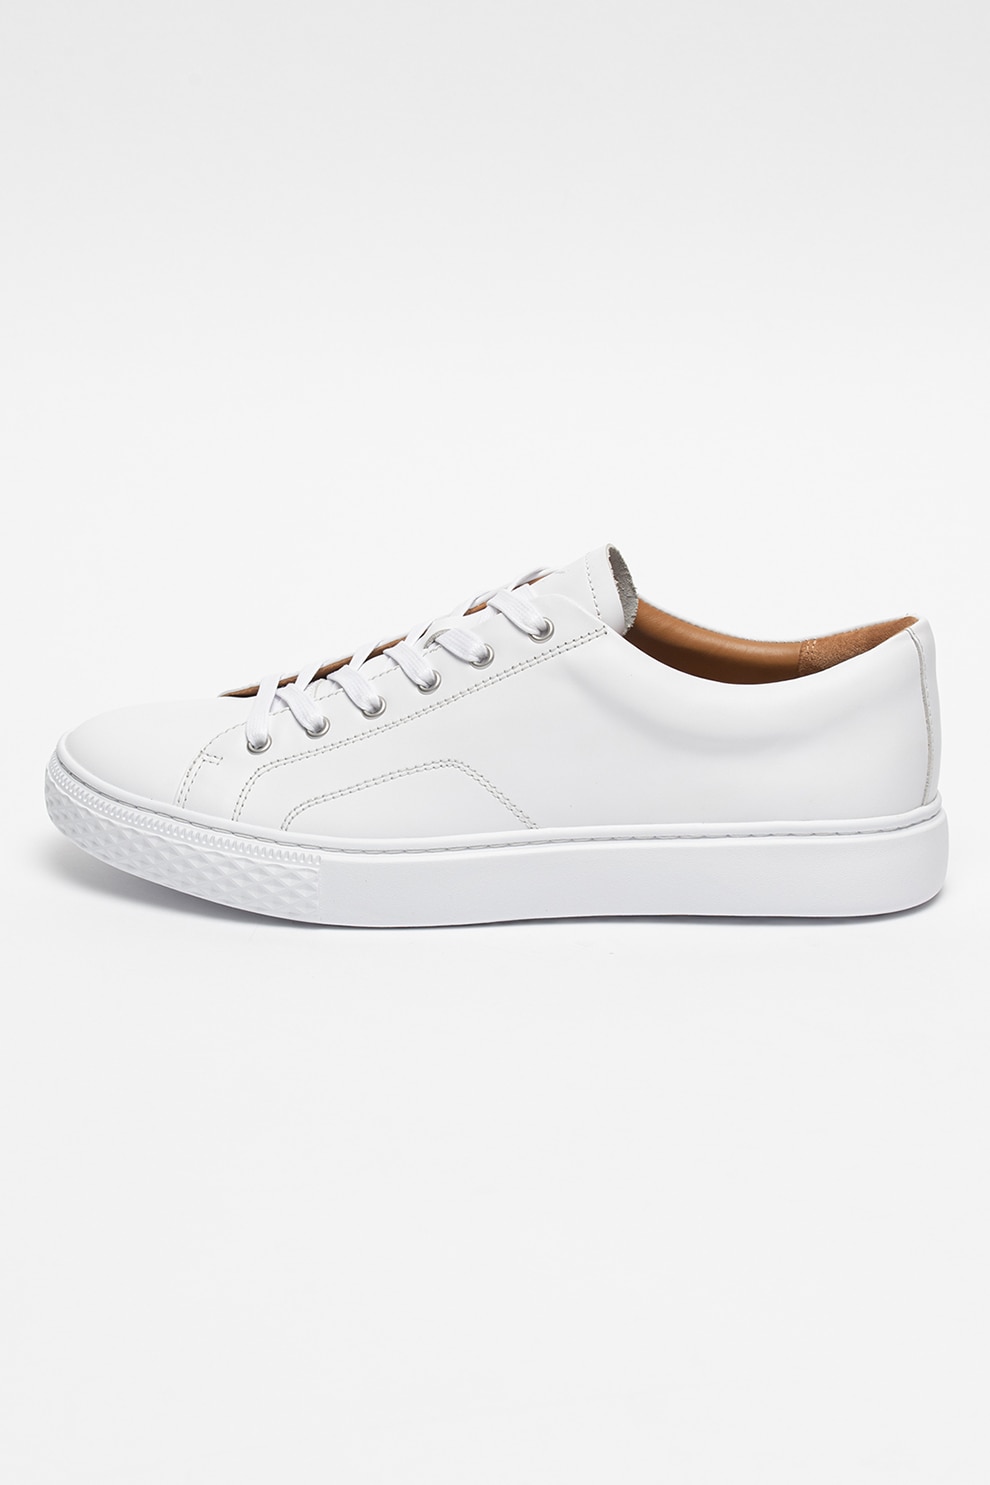 Polo Ralph Lauren, Pantofi sport de piele Dunovin II, Alb optic,  -  